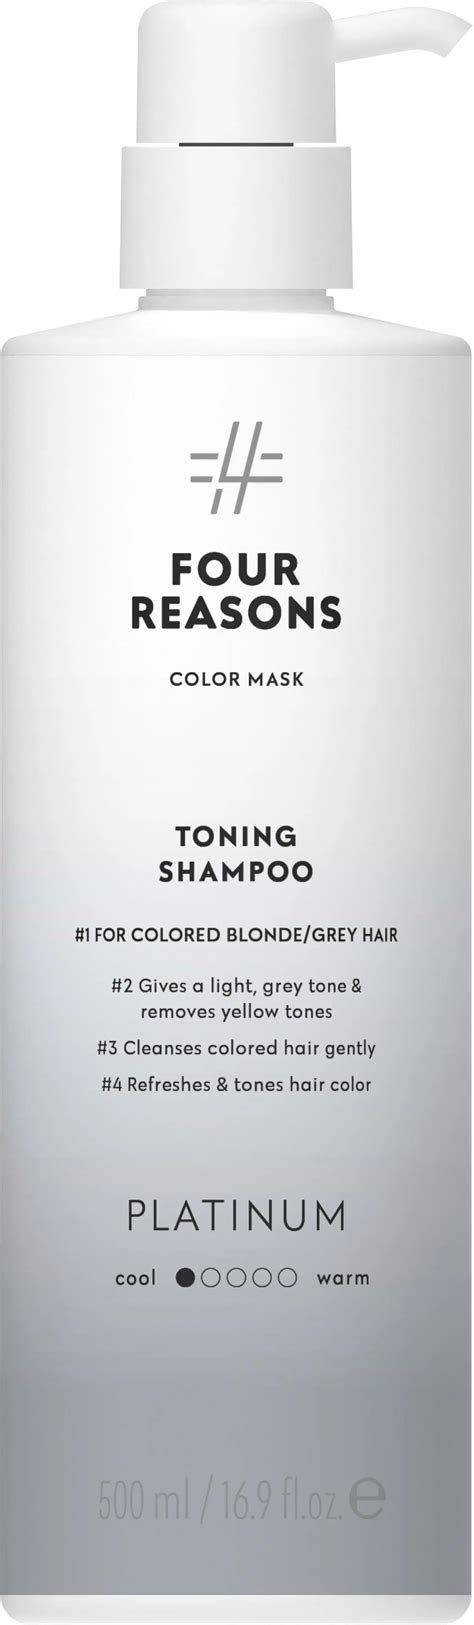 Four Reasons Color Mask Toning Shampoo Platinum 500 Ml Sokos Verkkokauppa